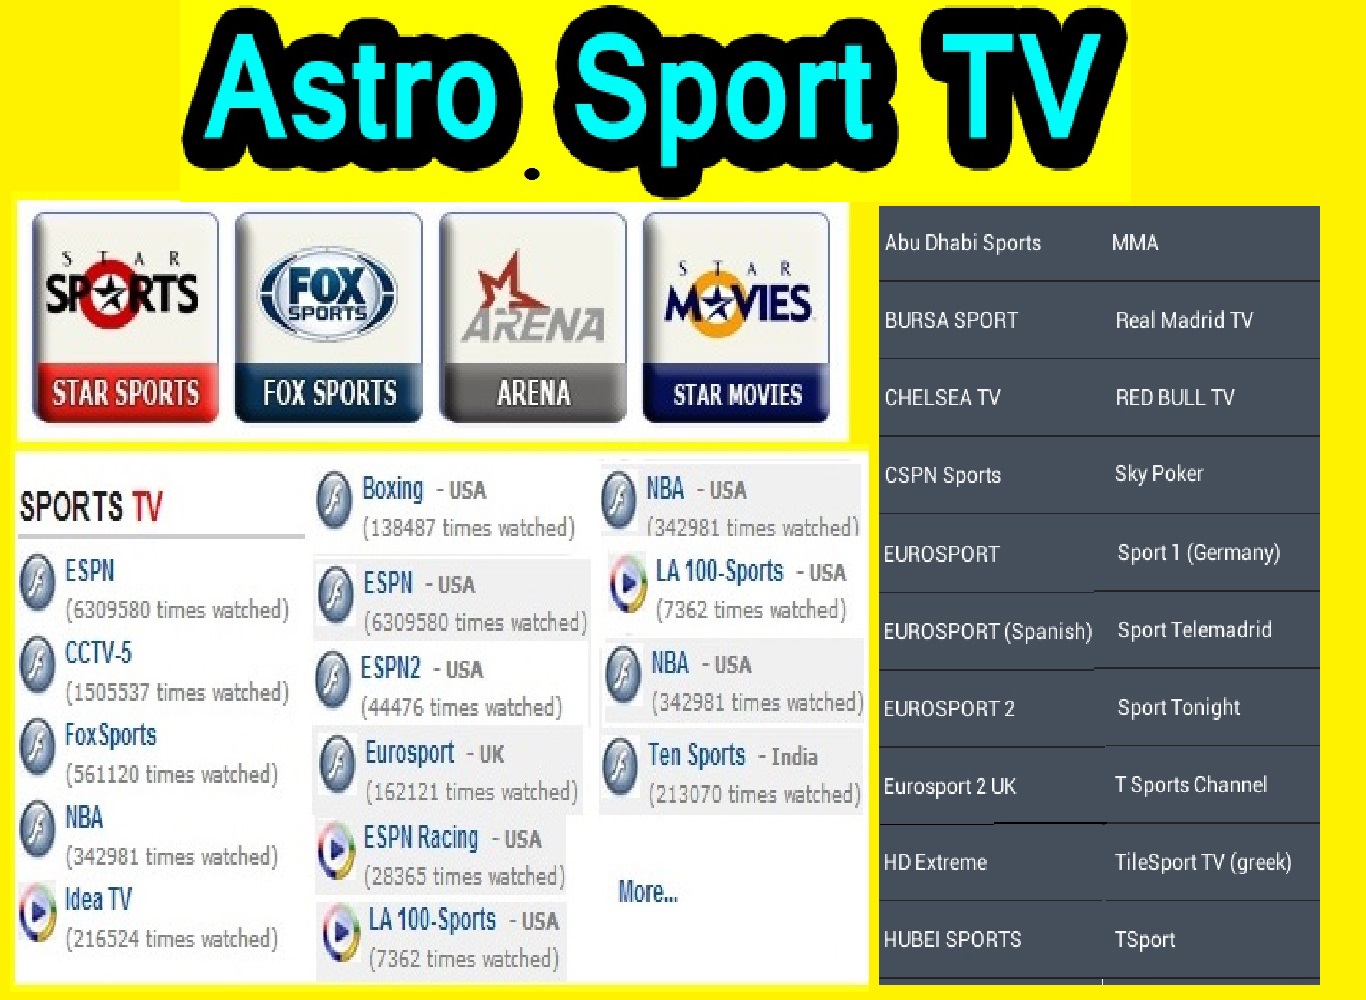 Astro sport channel